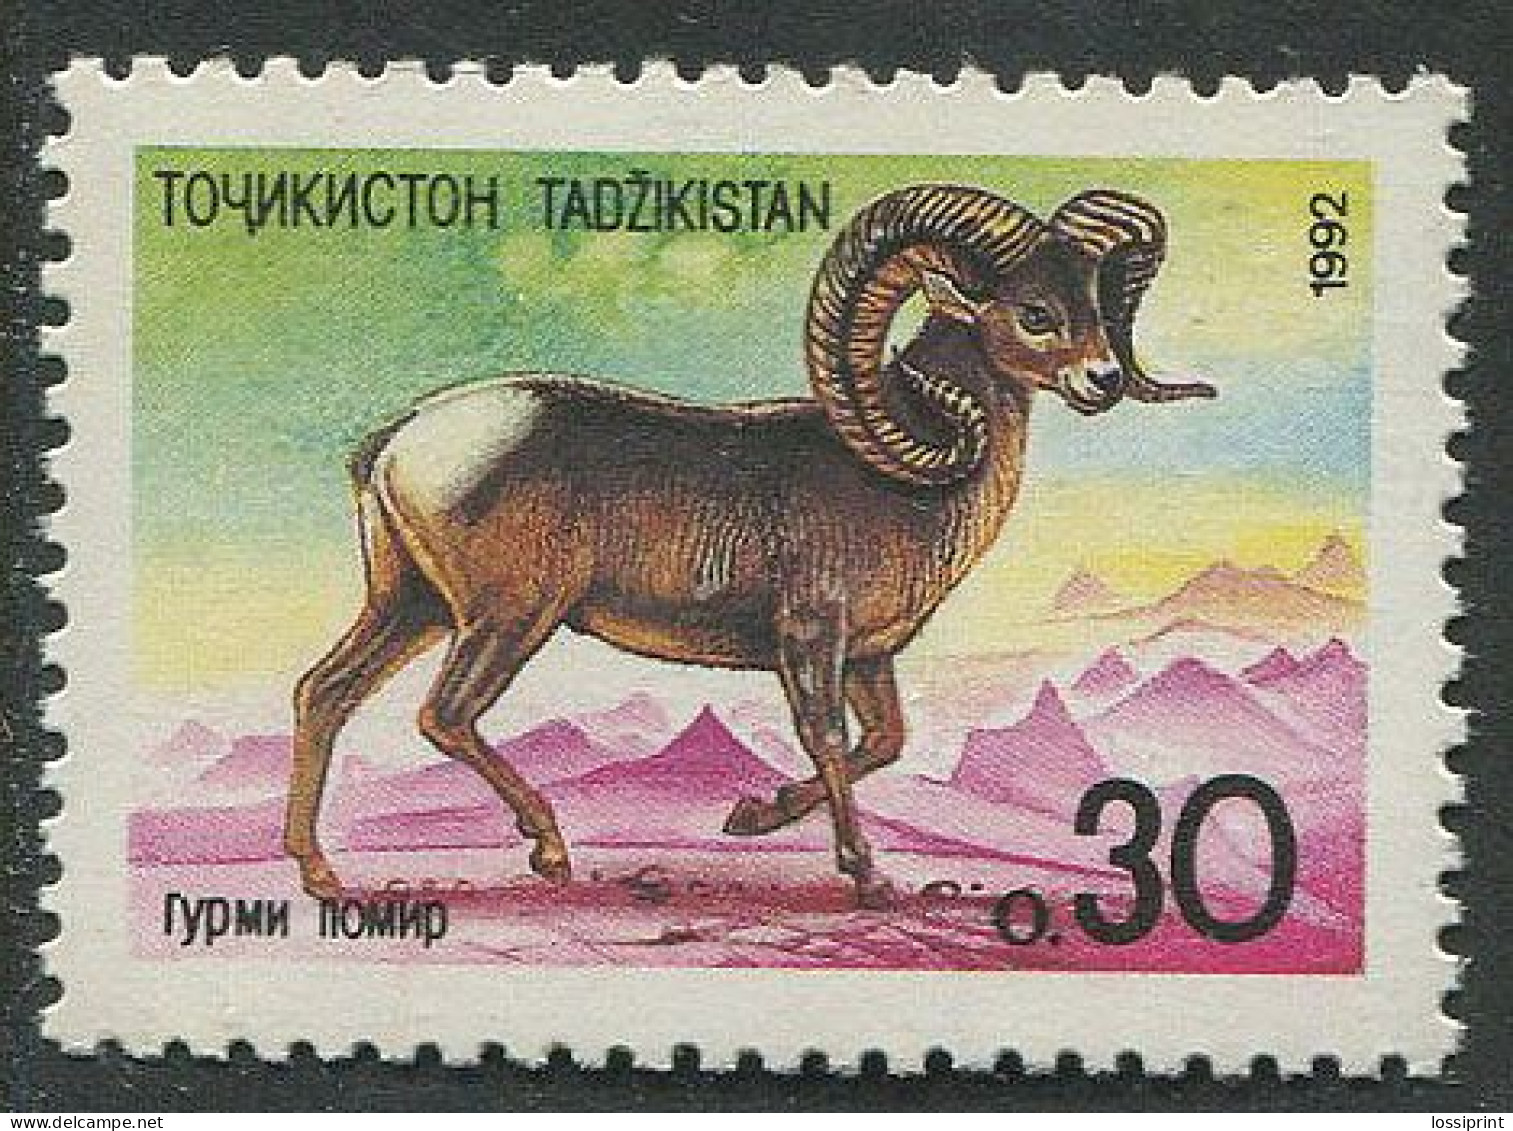 Tajikistan:Unused Stamp Animal, Goat, 1992, MNH - Tagikistan